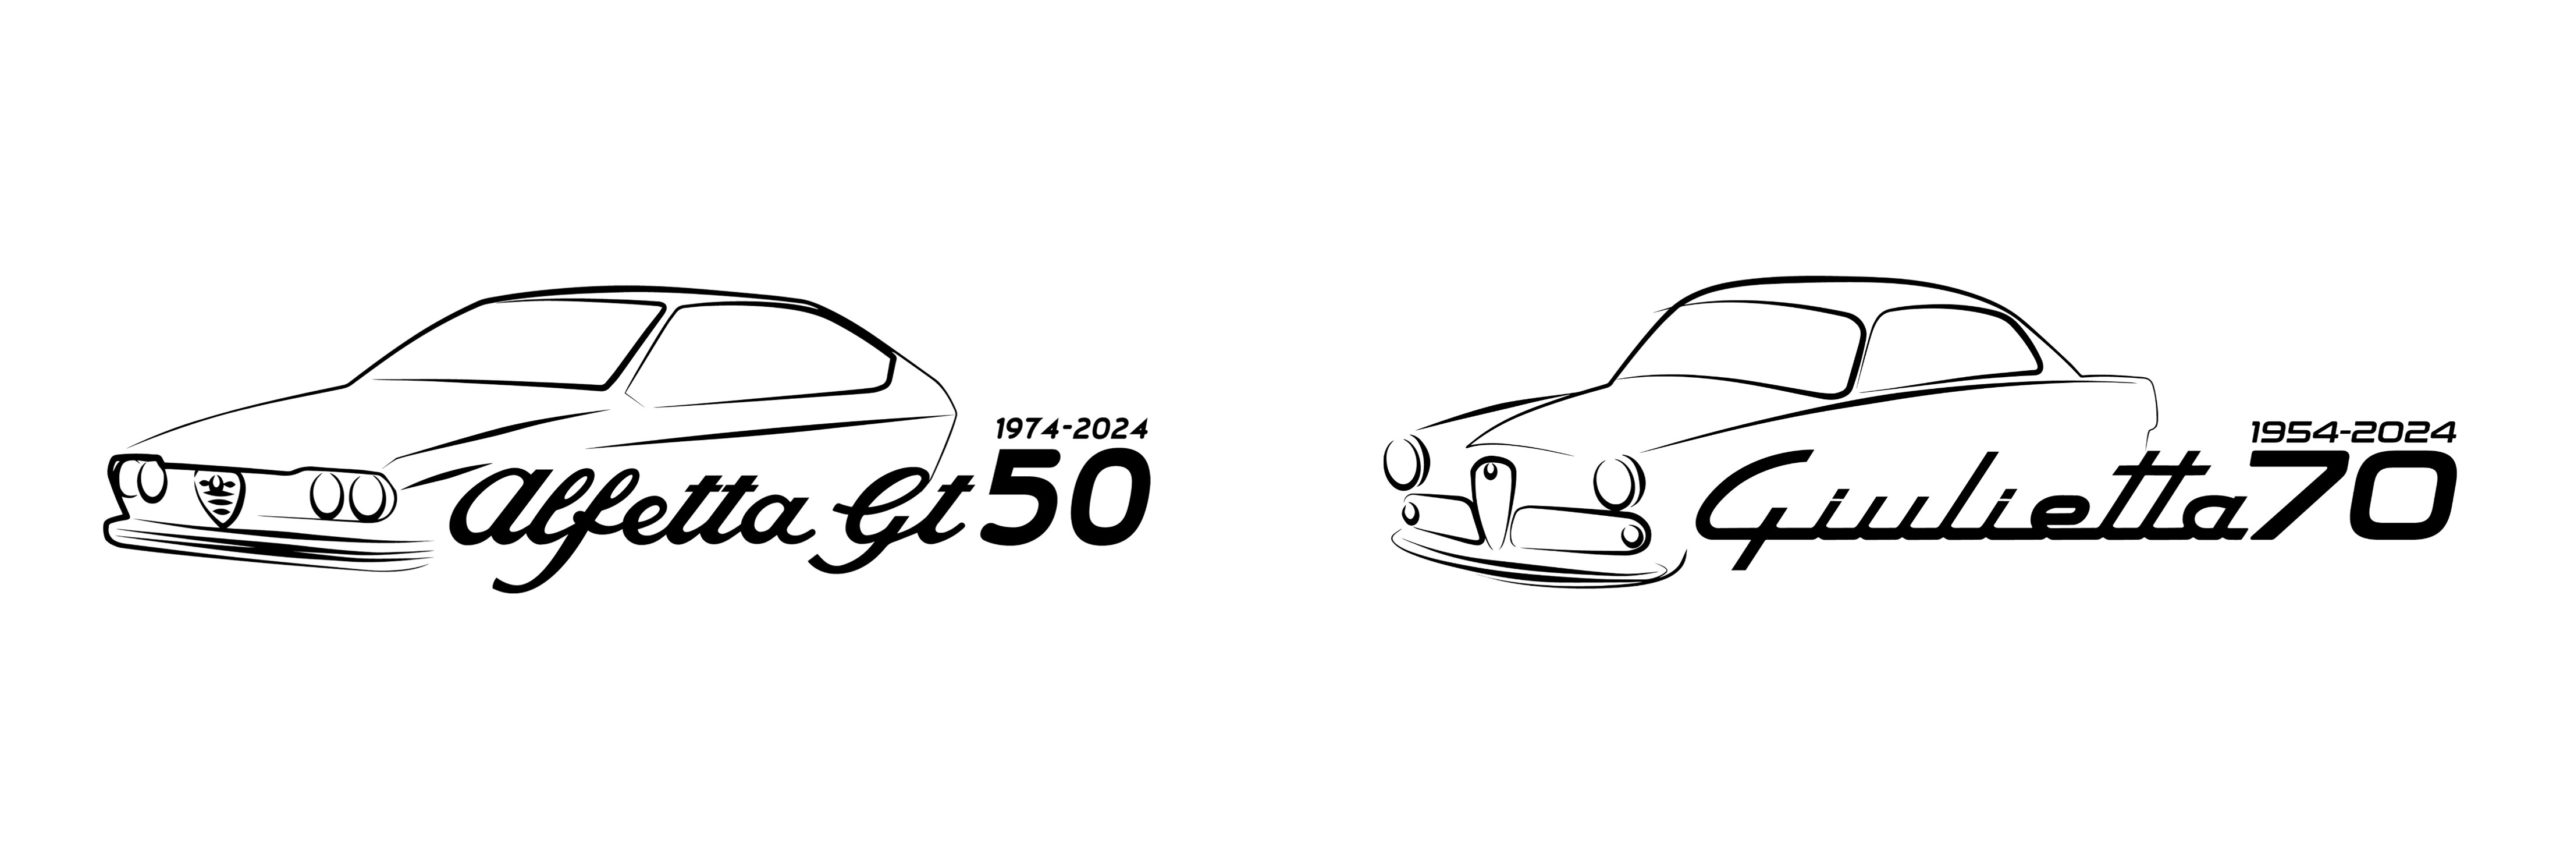 Aniversario AR Giulietta y AR Alfetta GT